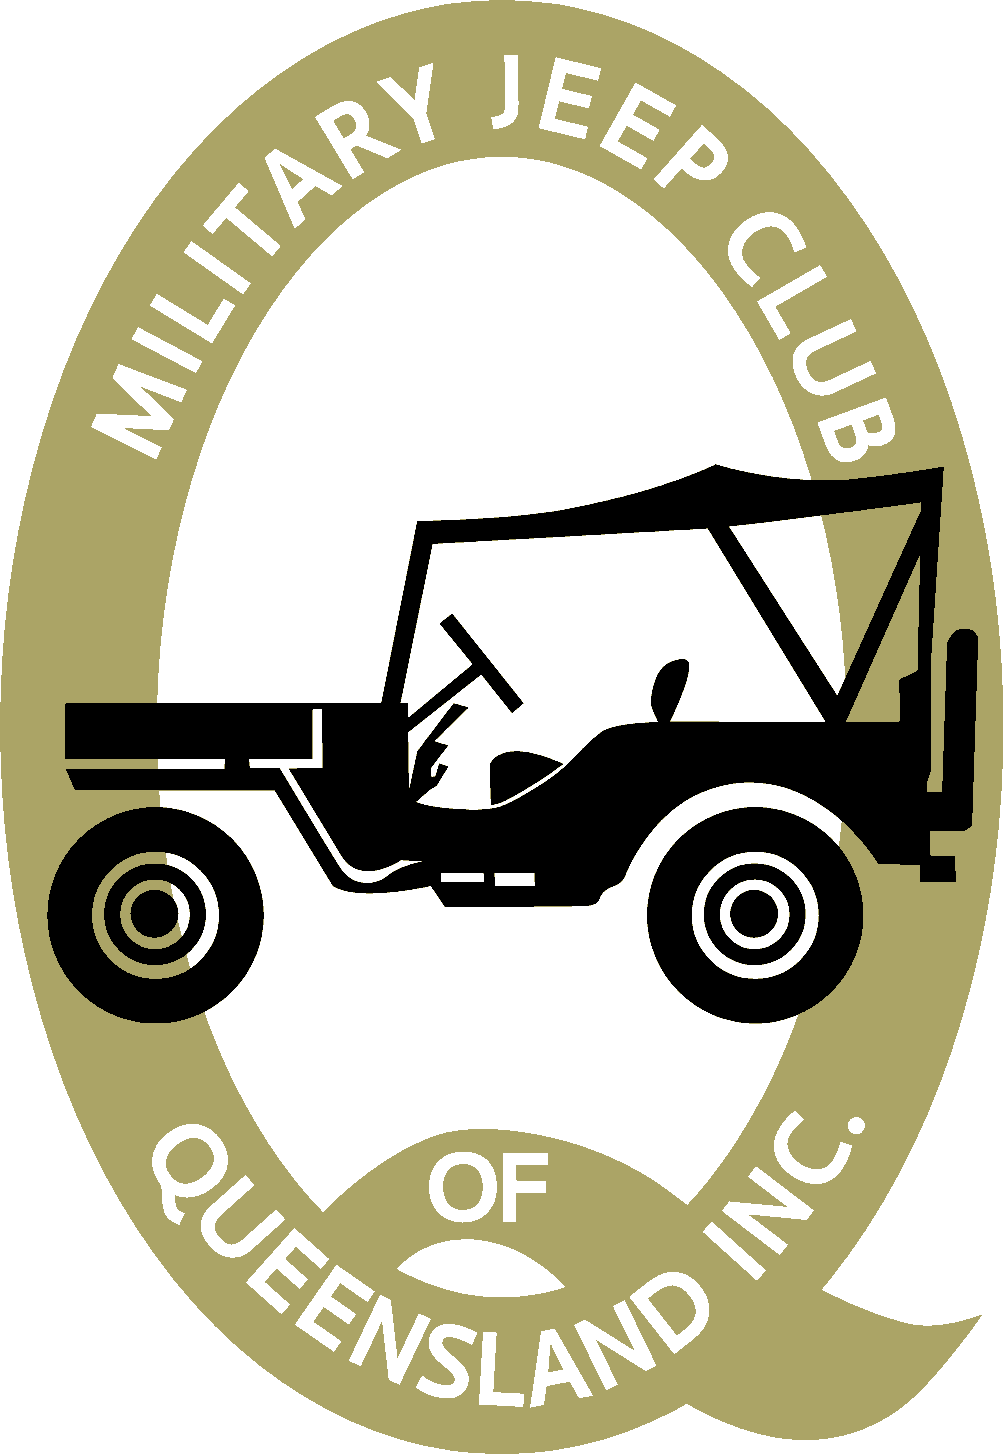 Military Jeep Club of Qld 